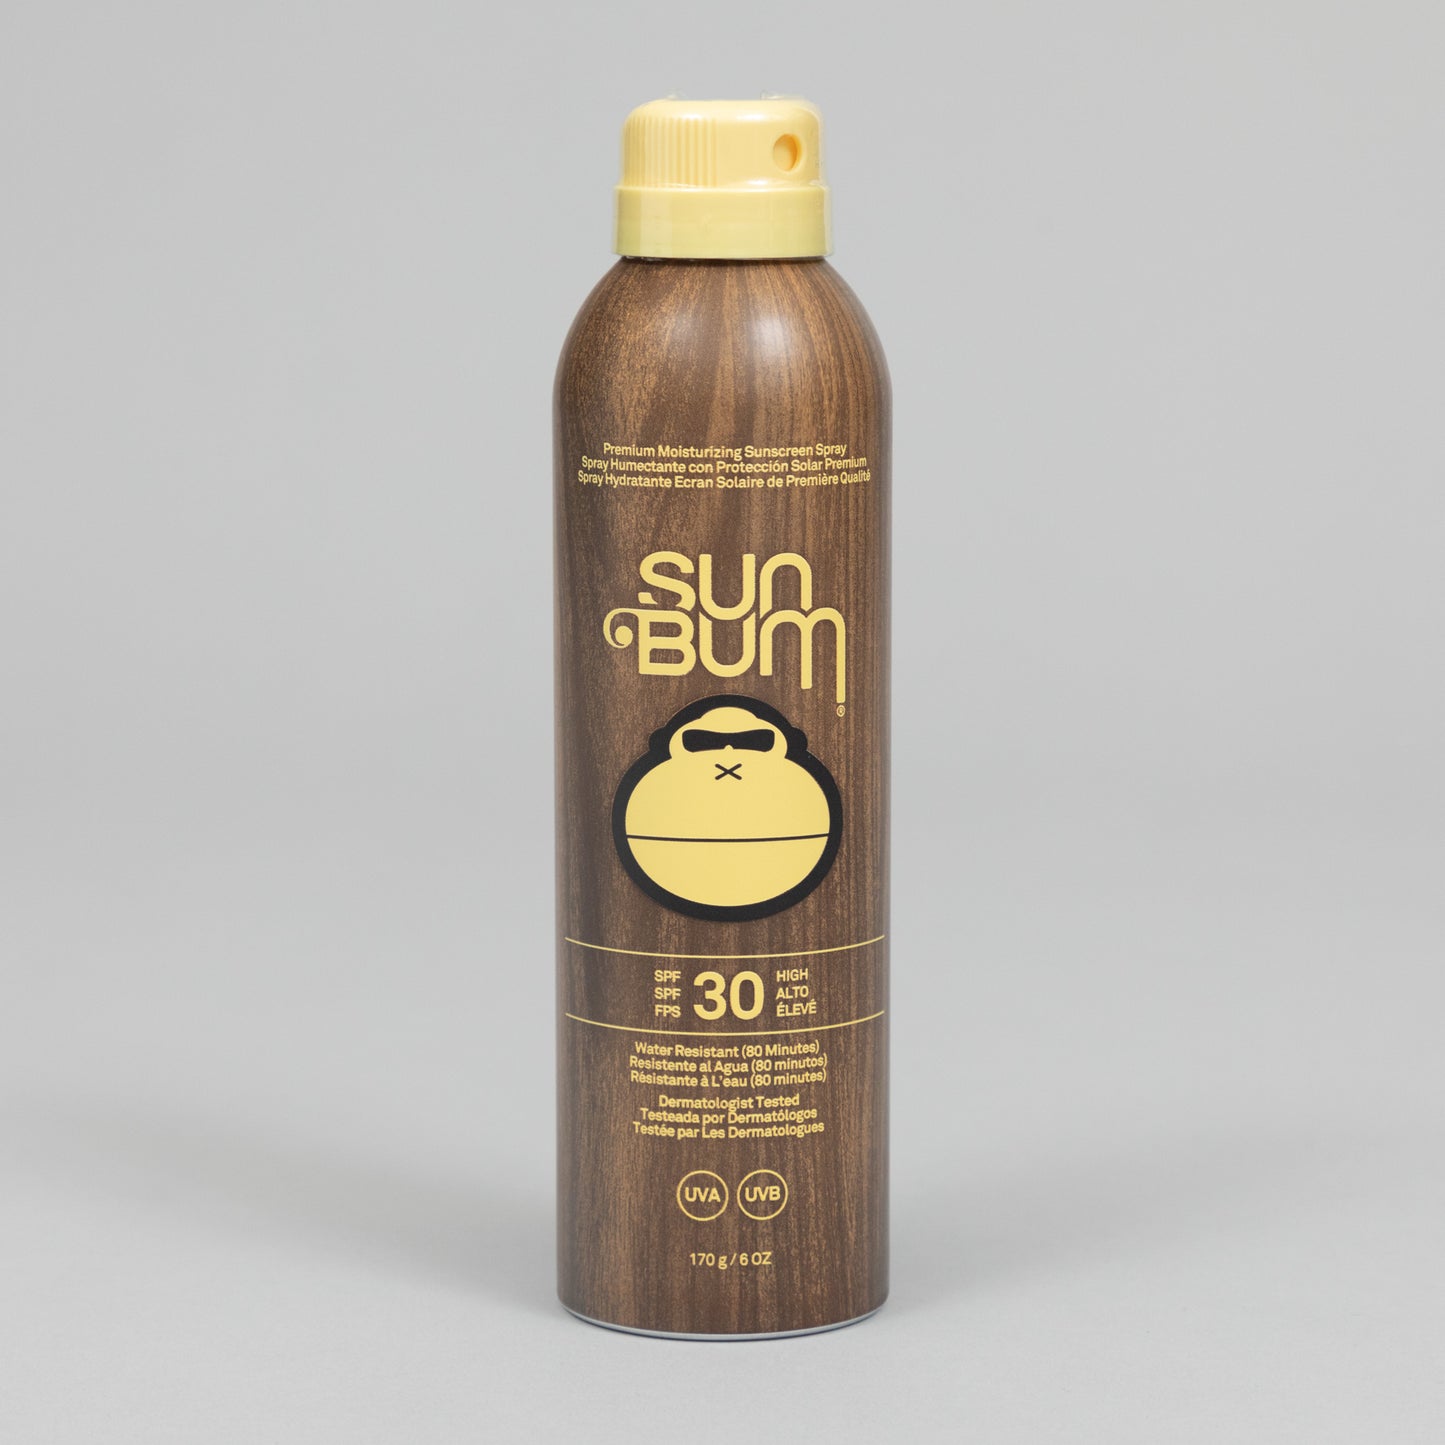 SUN BUM Original SPF 30 Sunscreen Spray (170g)